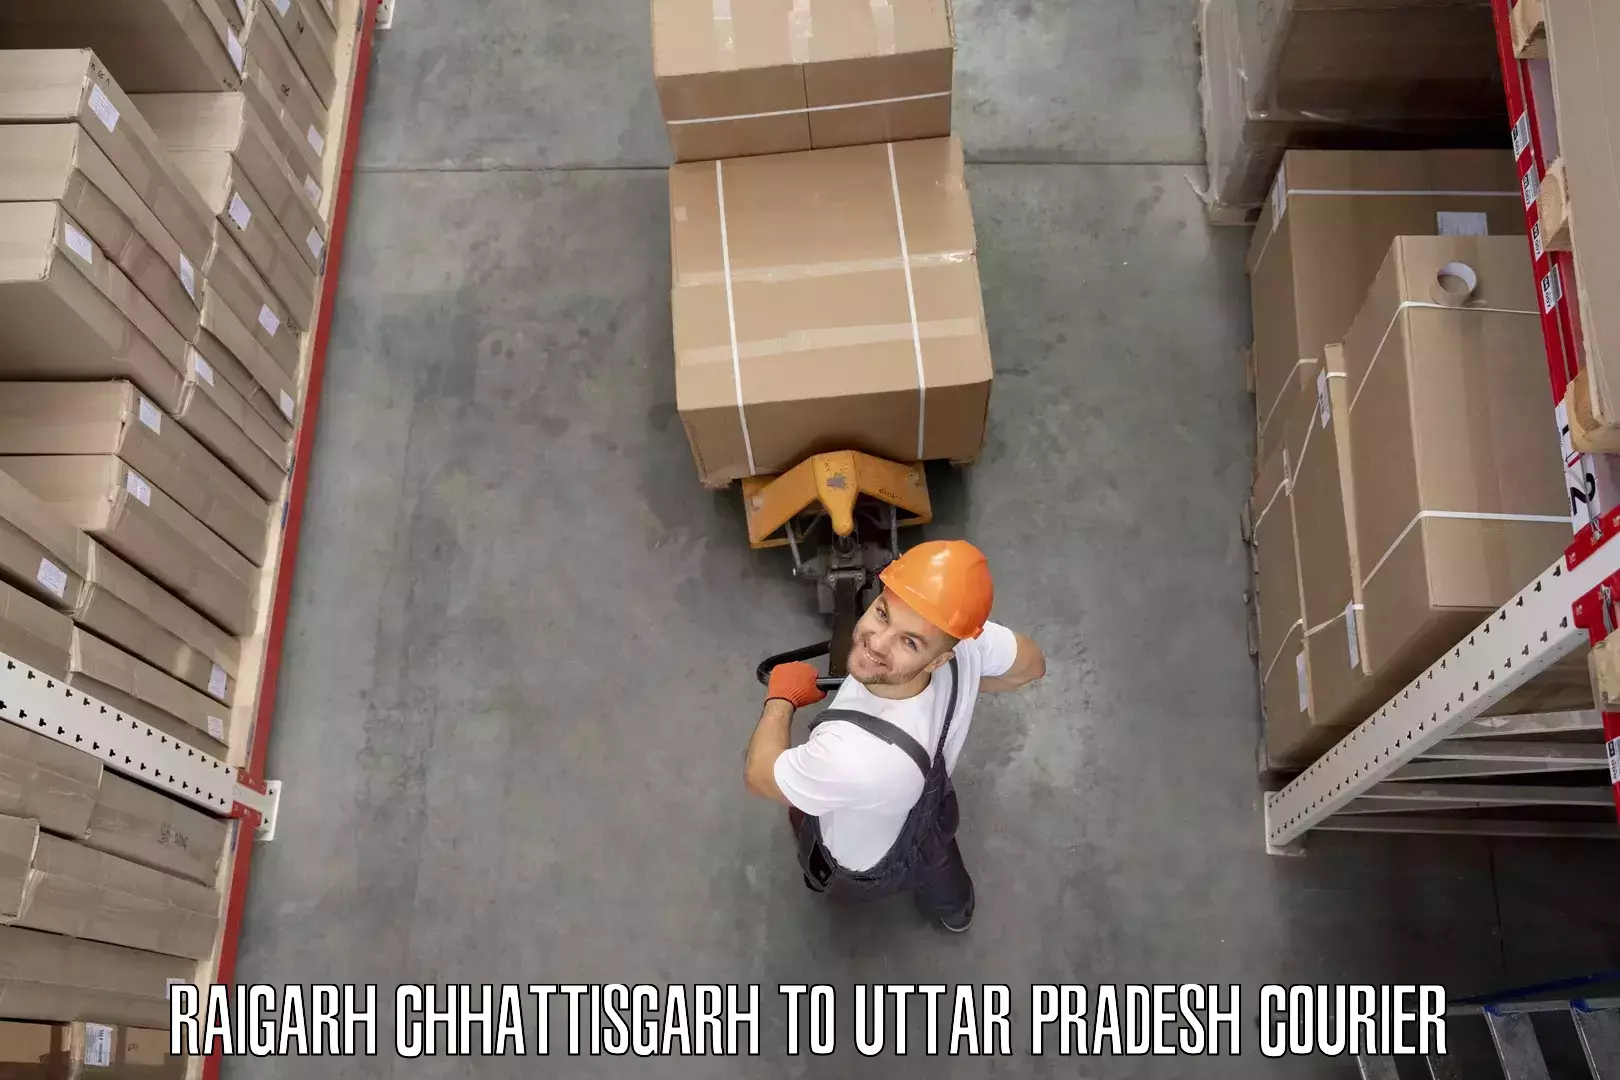 Furniture moving services in Raigarh Chhattisgarh to Bhadohi